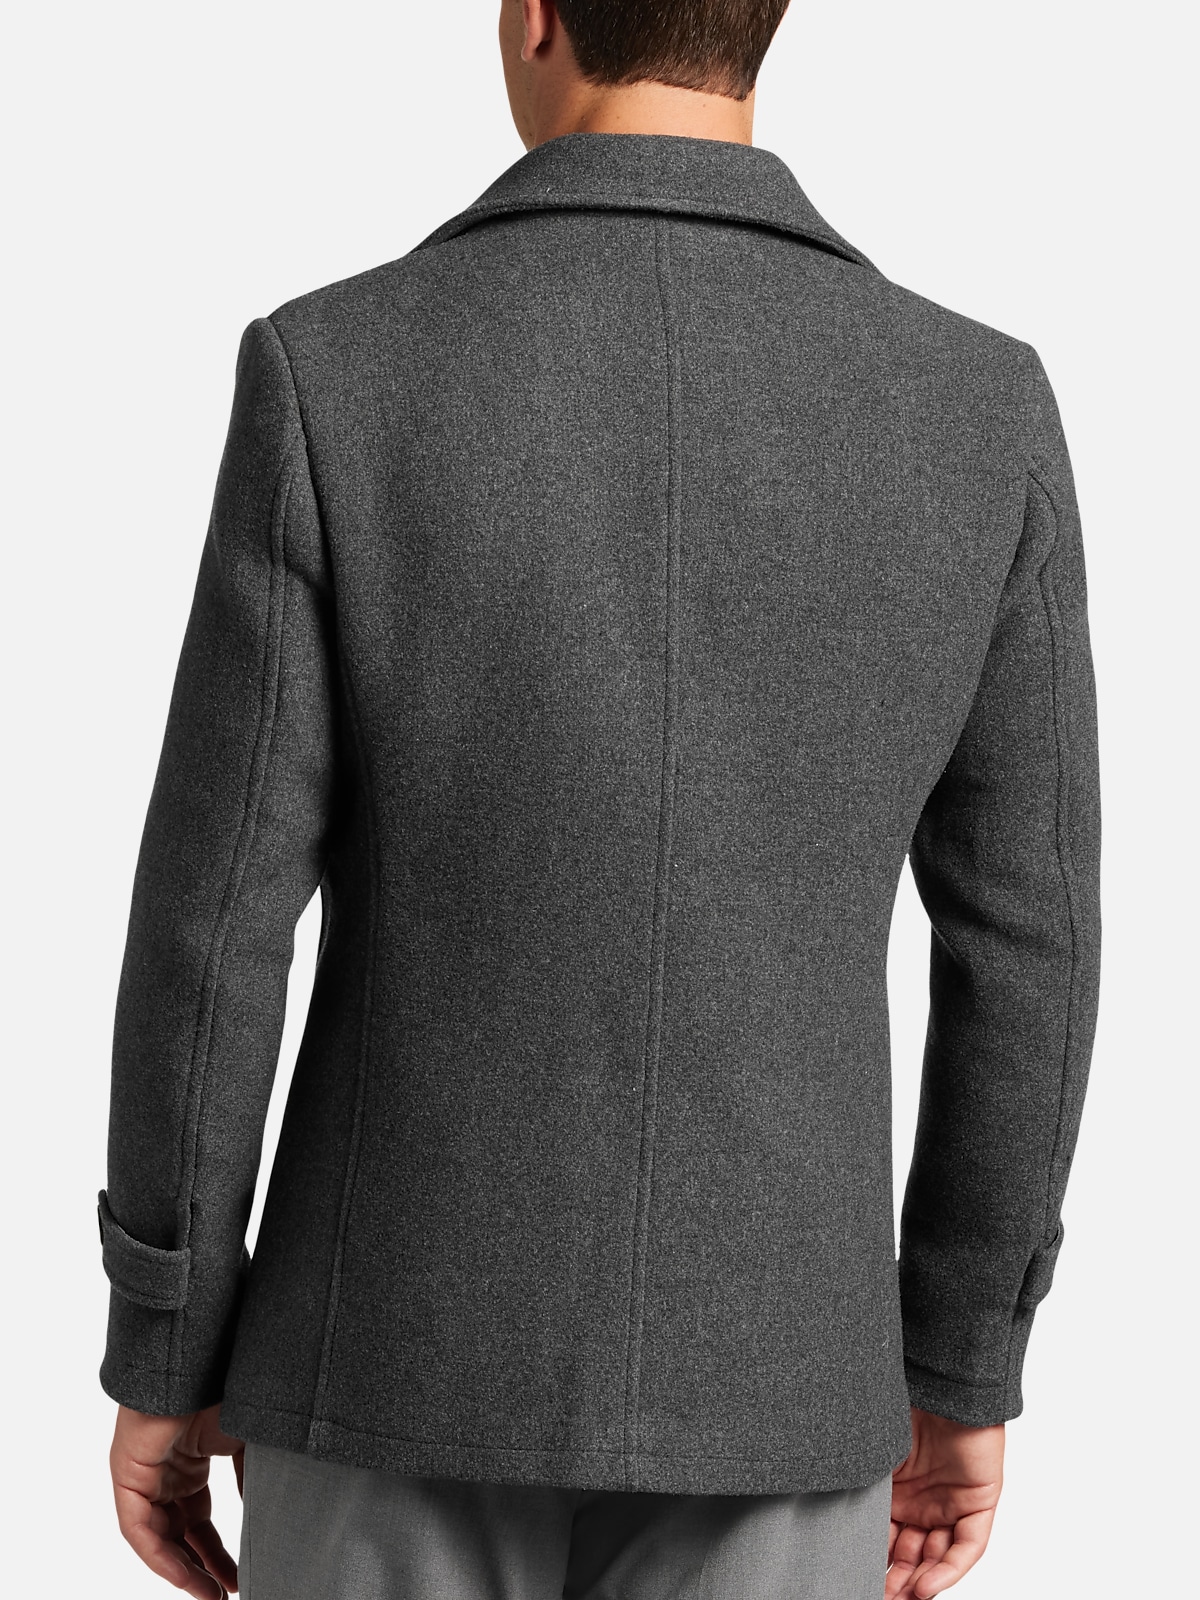 Michael Kors Men's Classic Fit Topcoat Charcoal Gray - Size: Small